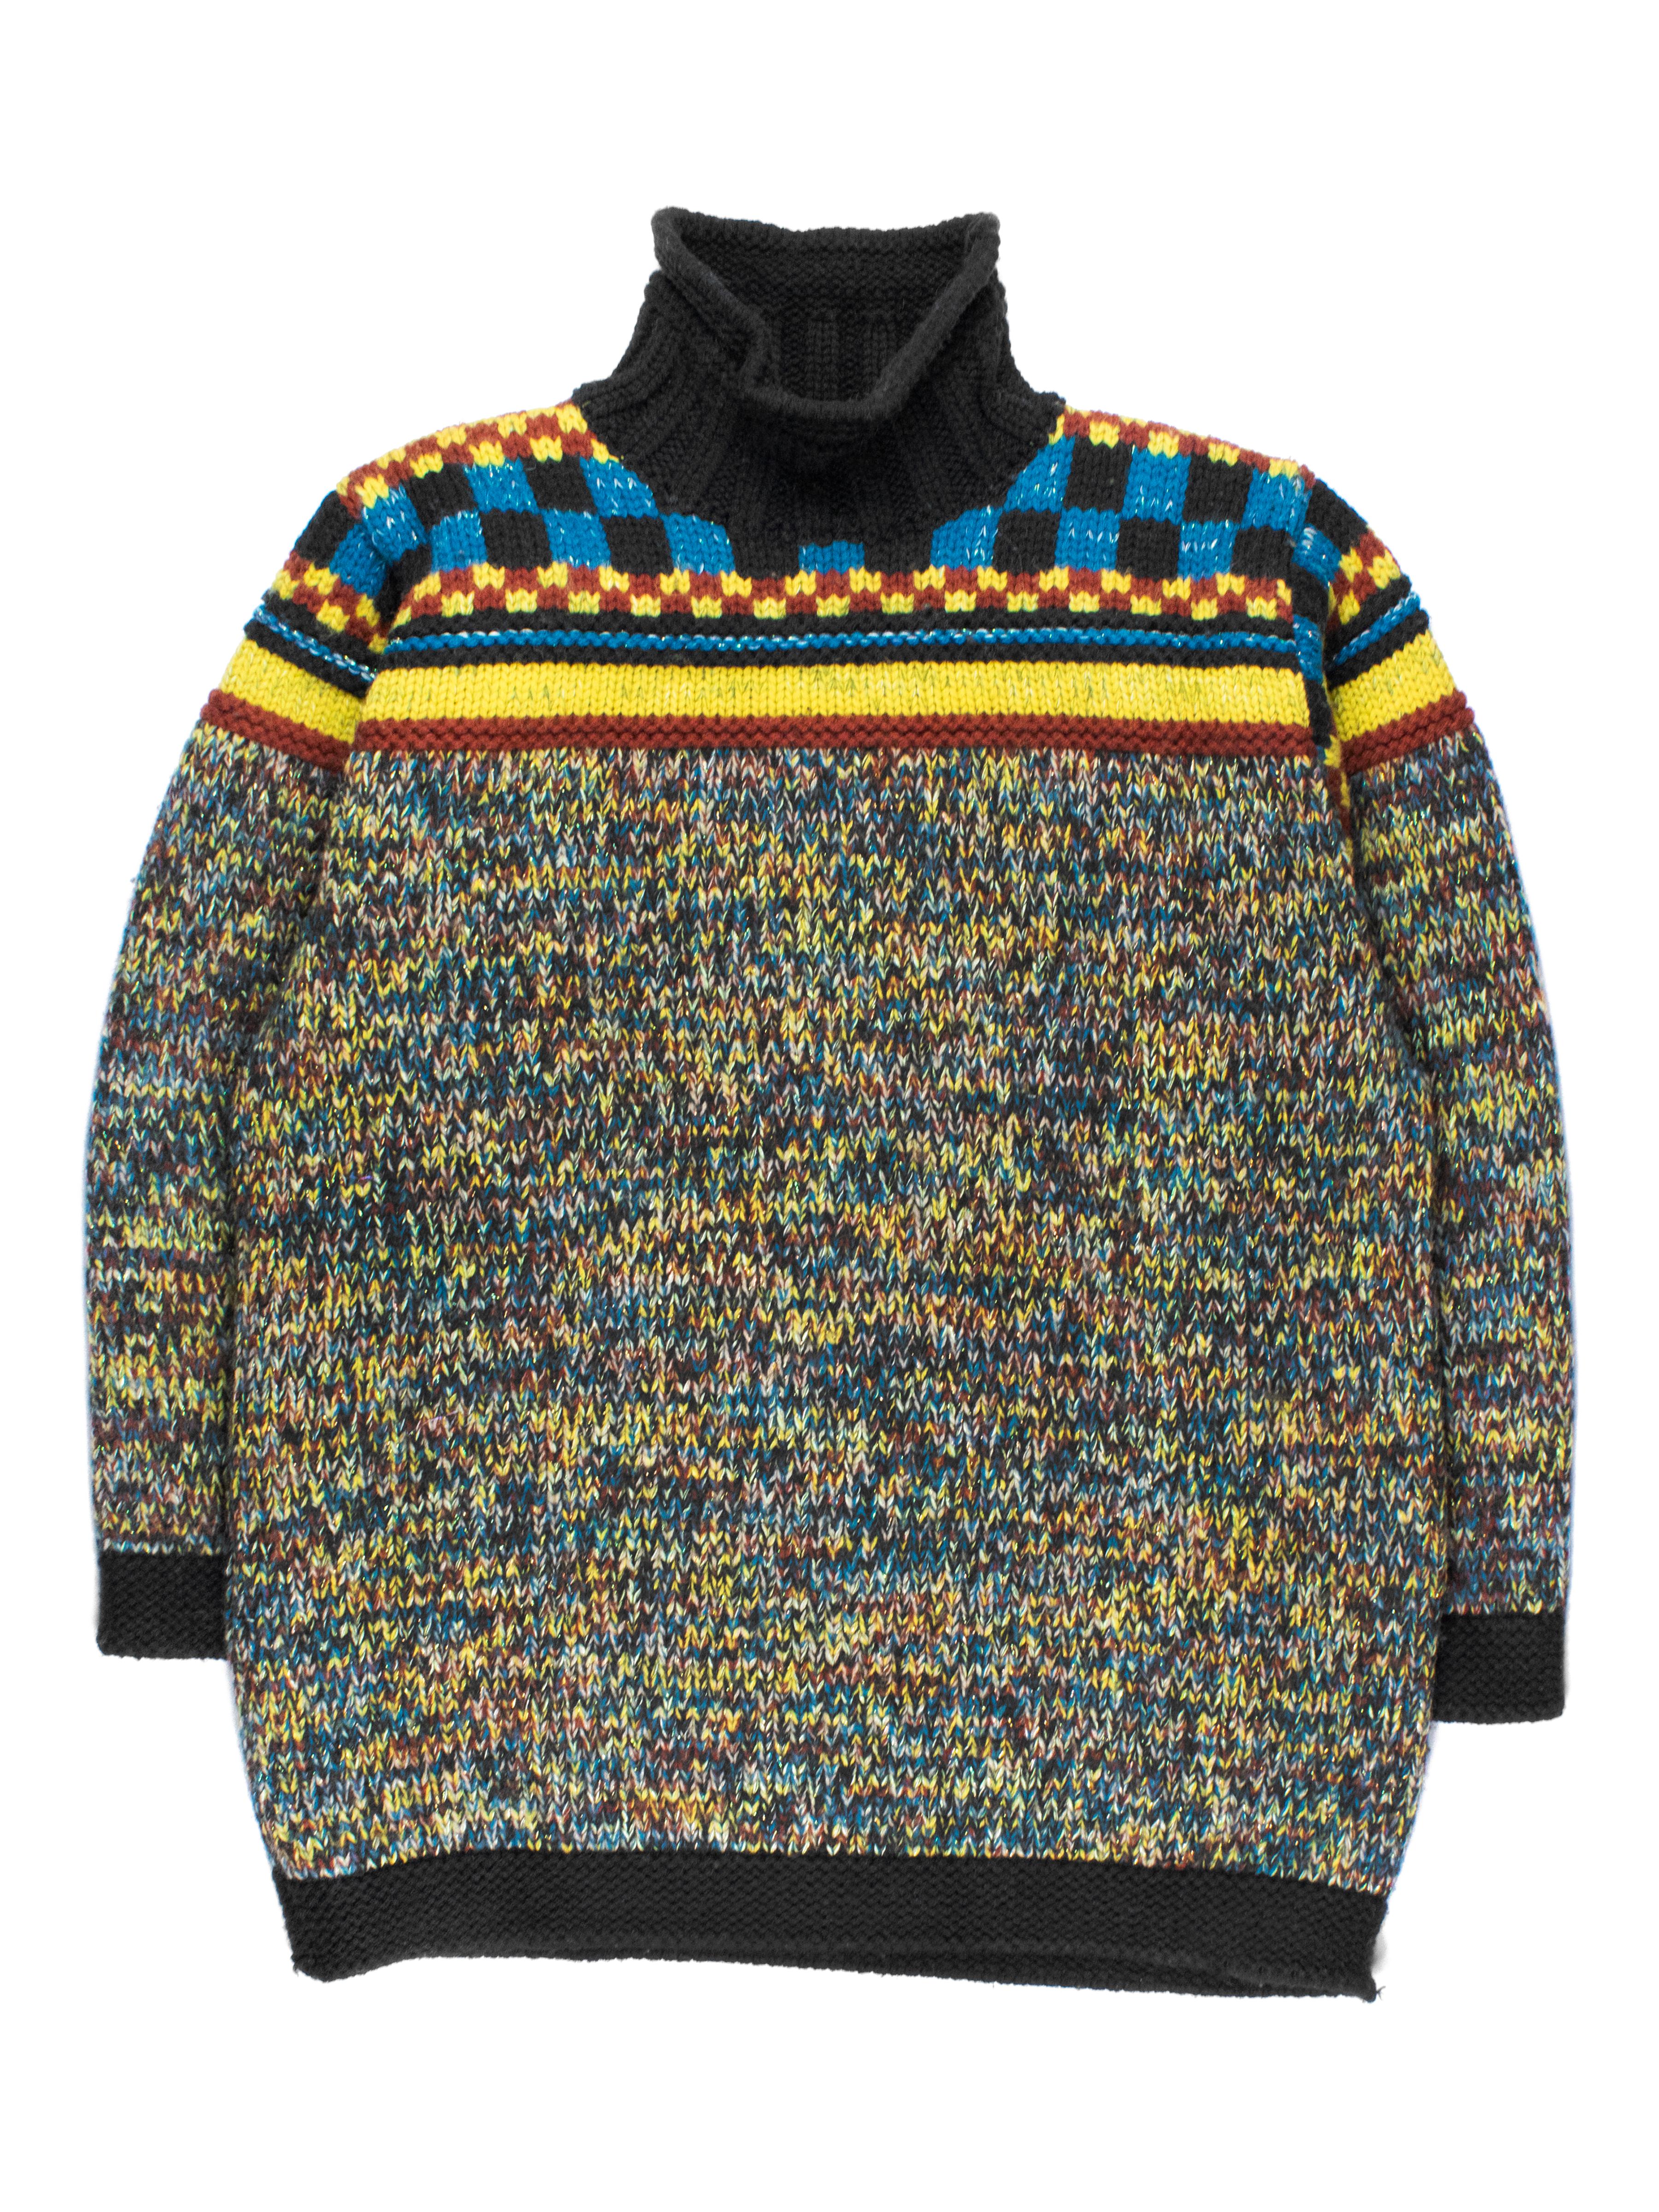 jean paul gaultier circuit board sweater